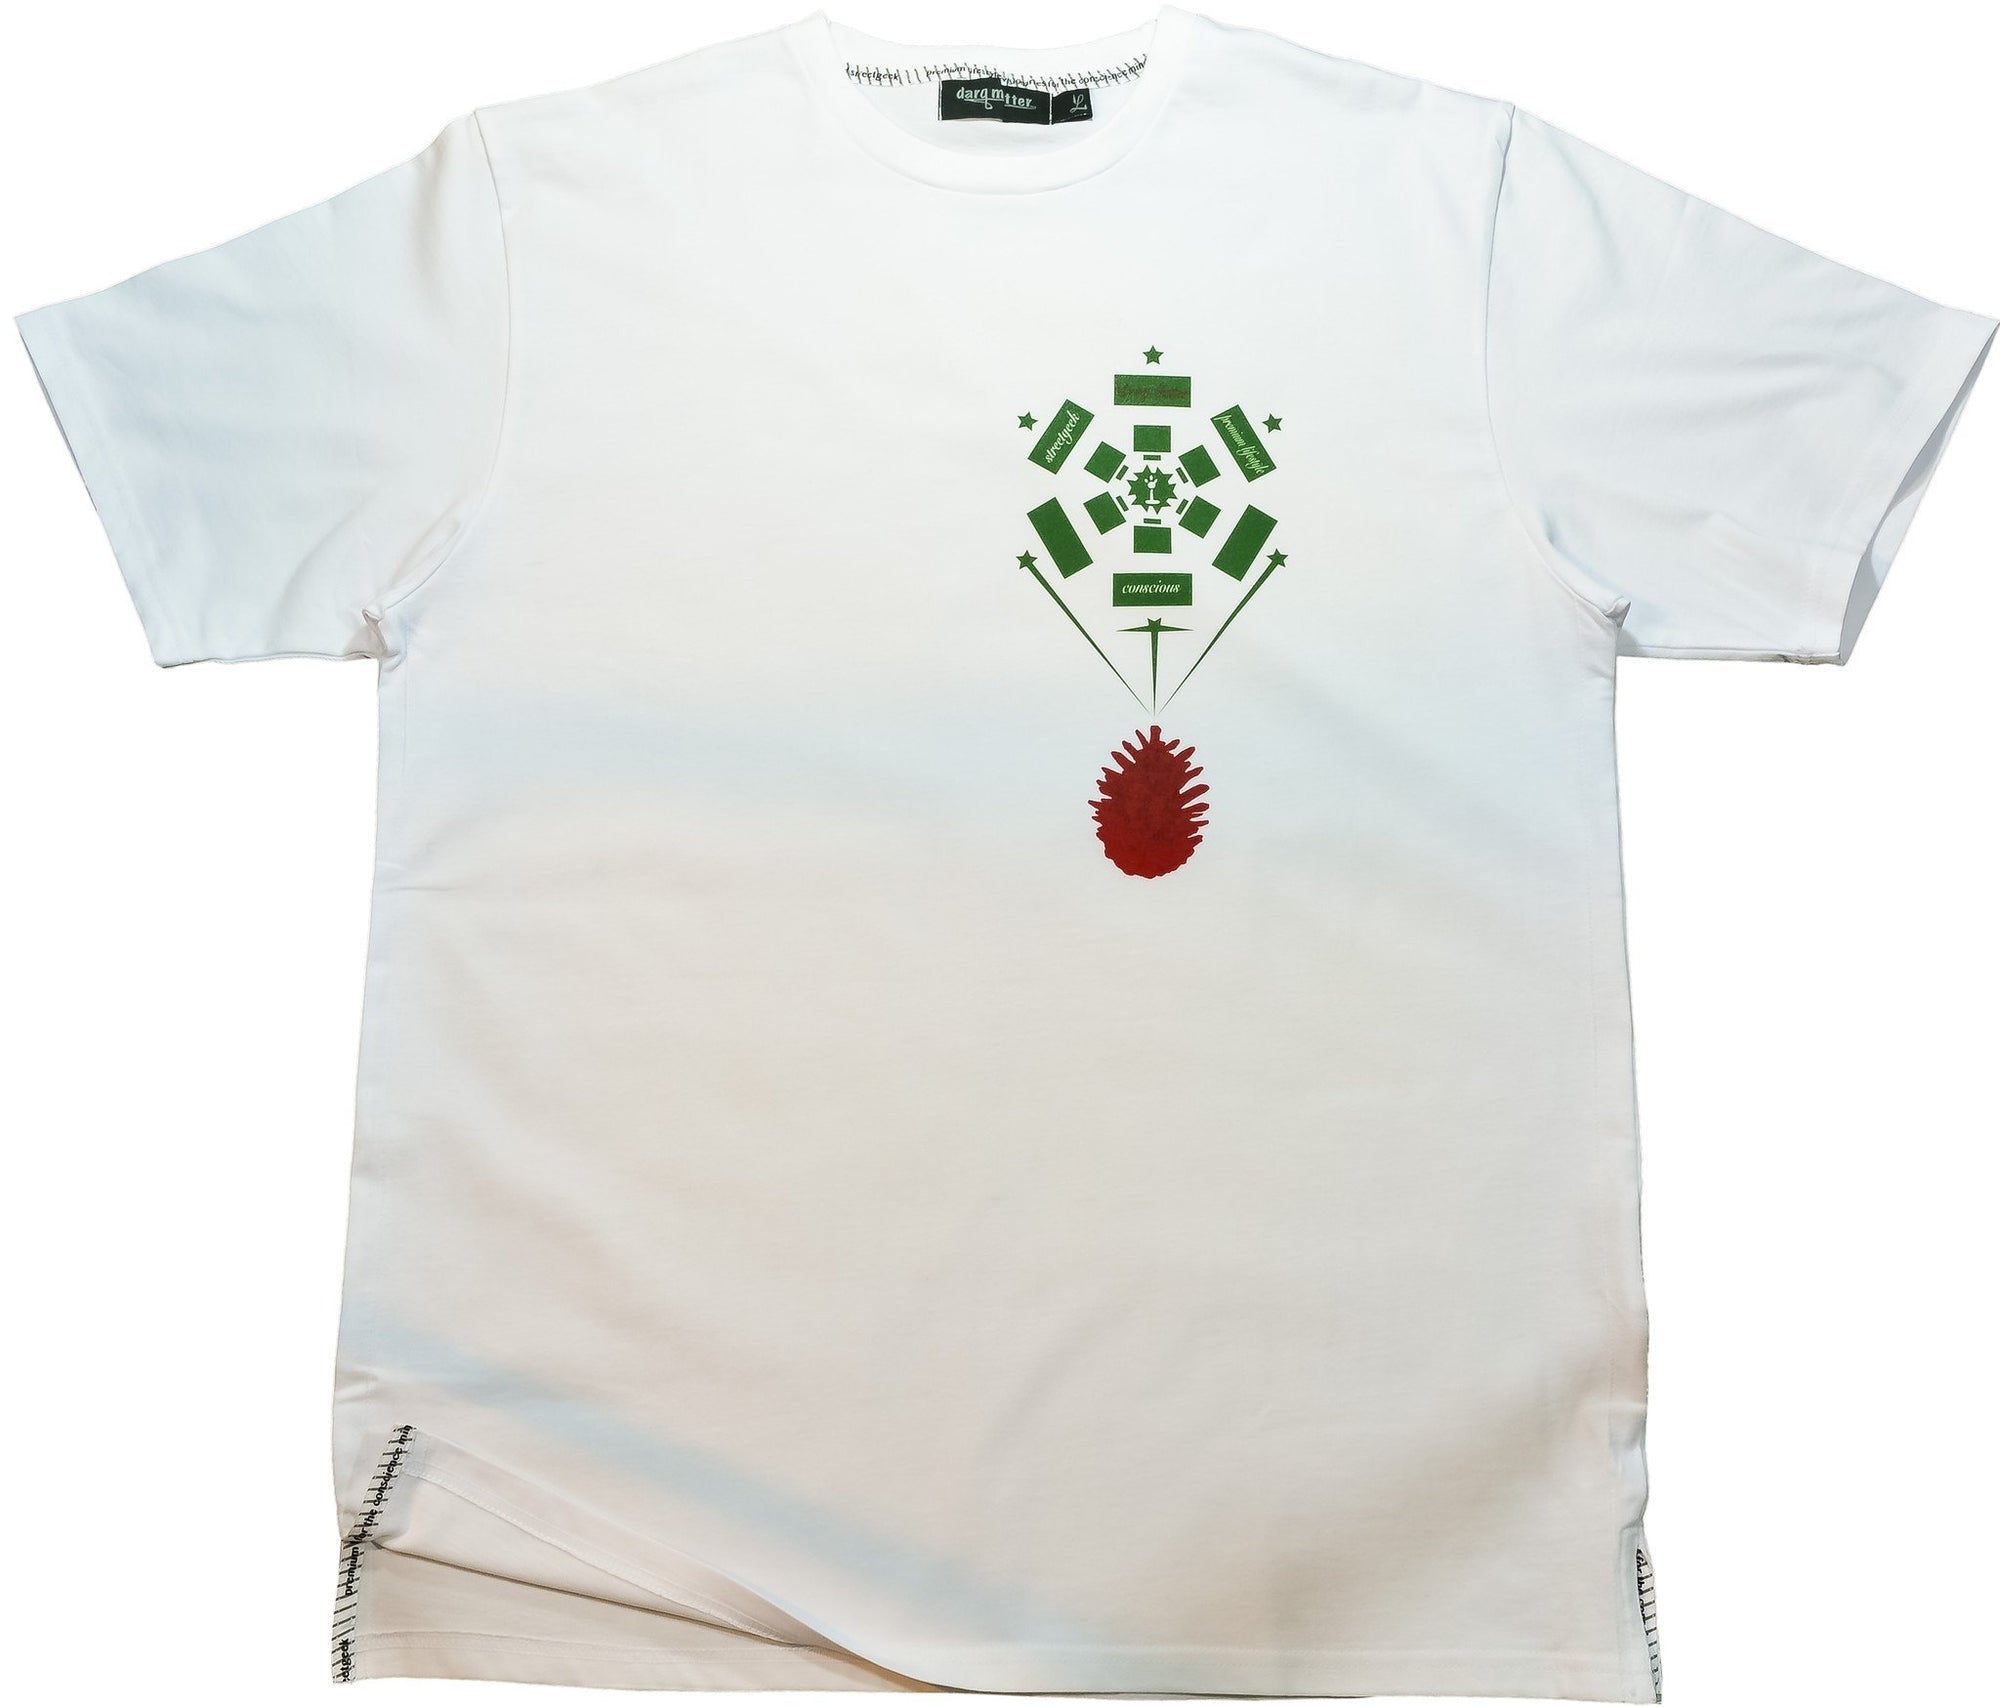 DarqMatterDesign CutnSew T-Shirts Small / White Vanguard